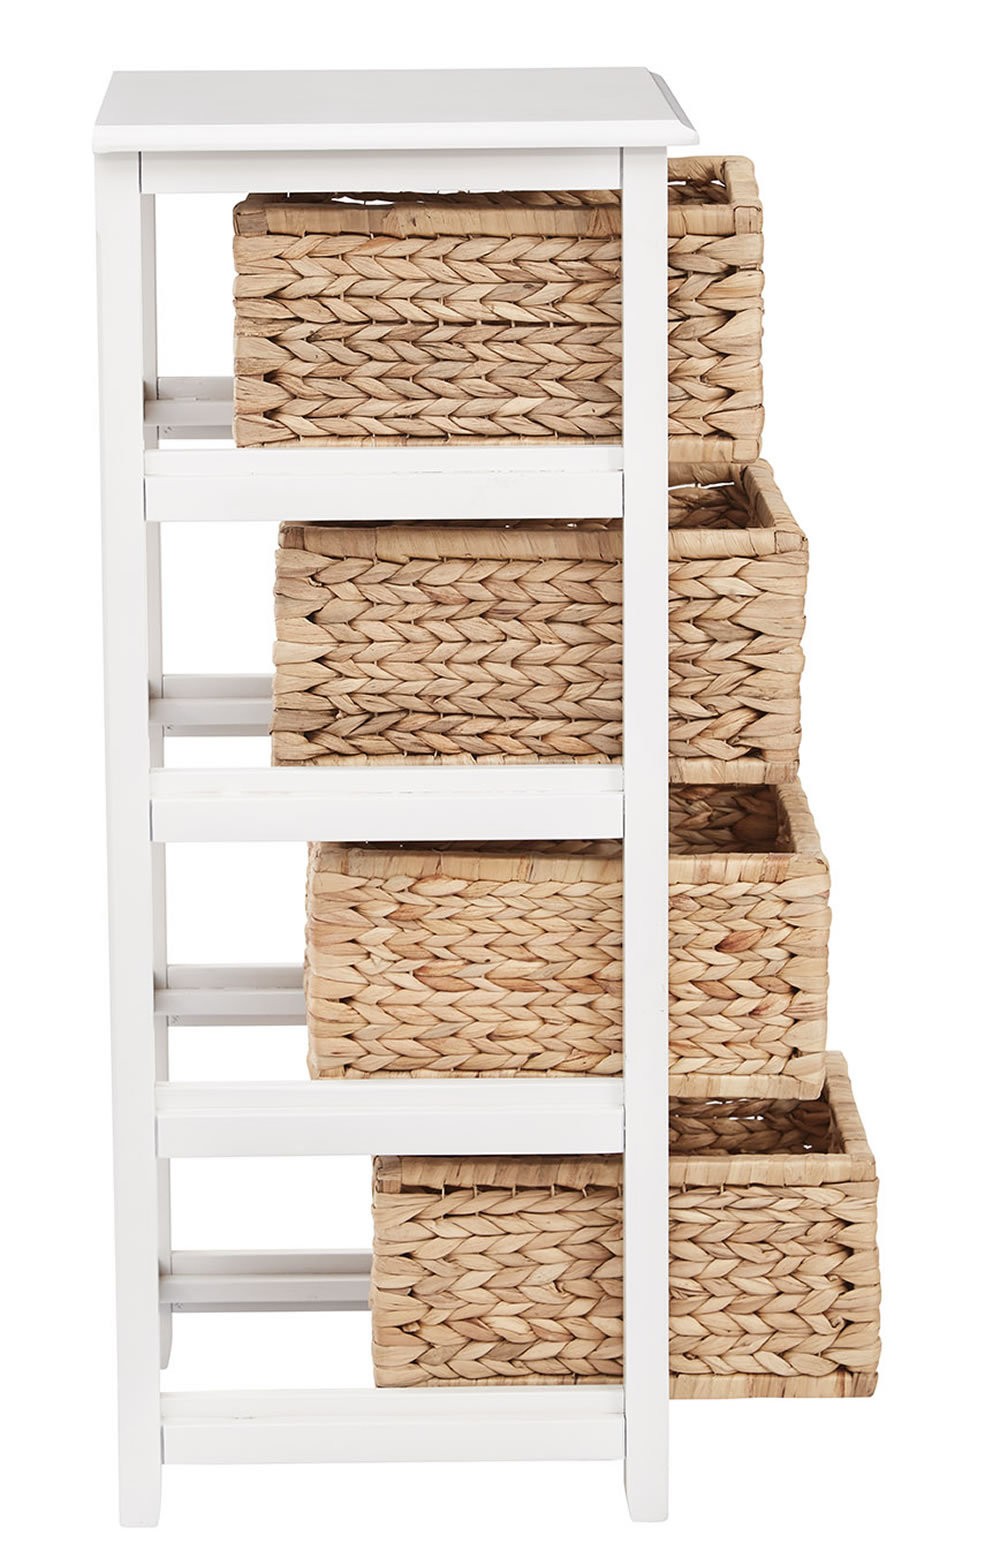 4 drawer espresso or white wood storage tower w baskets